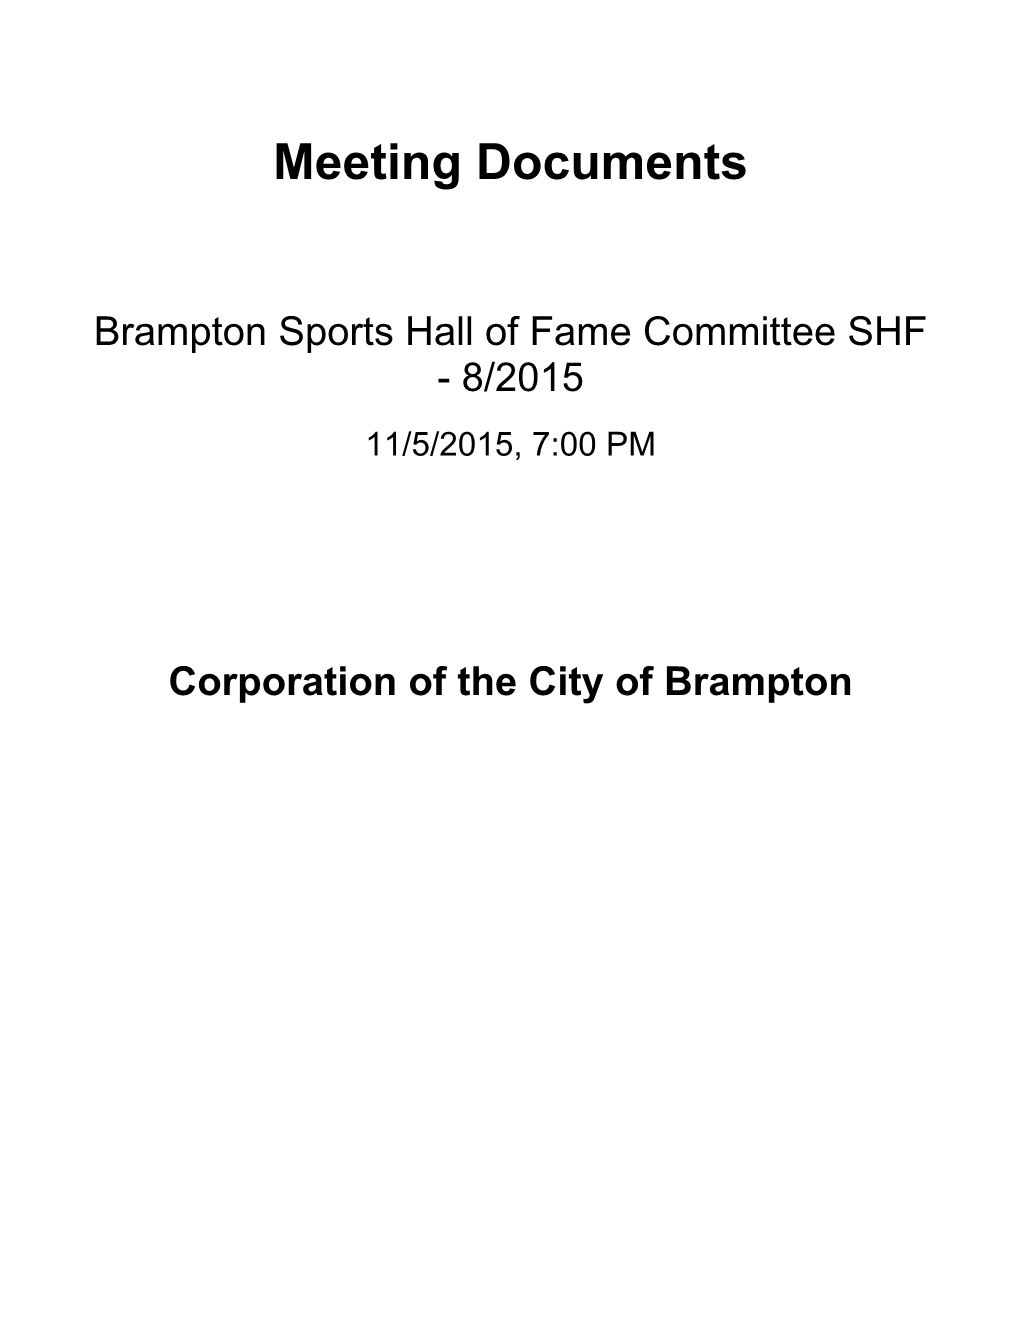 Brampton Sports Hall of Fame Committee Agenda